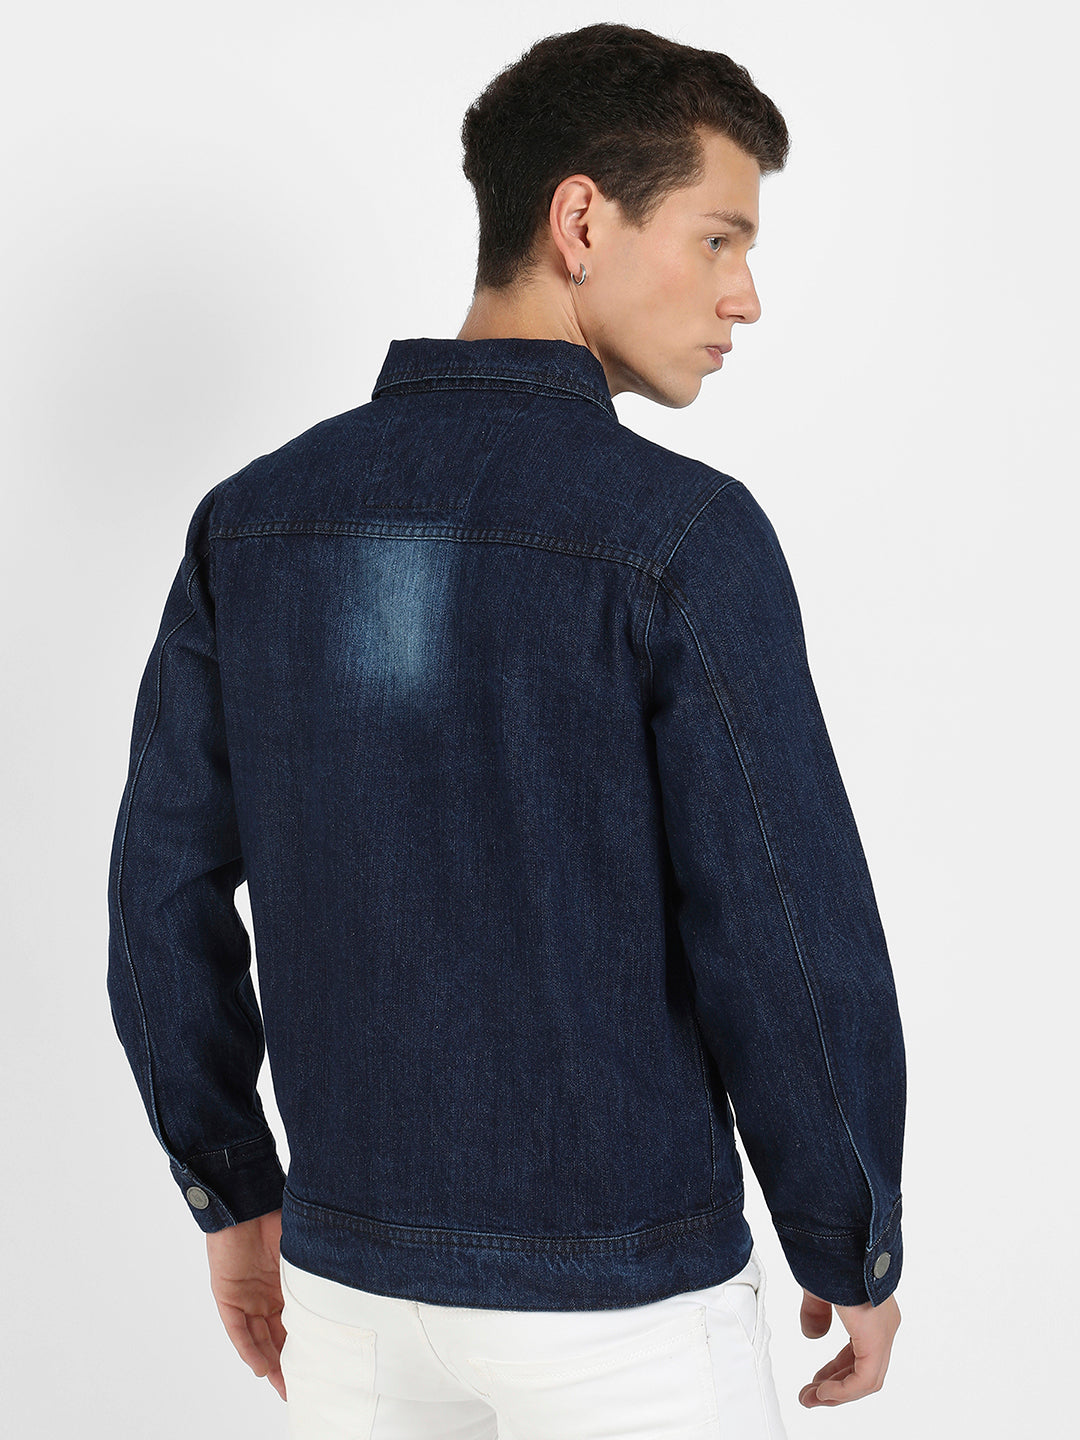 Medium-Wash Denim Jacket With Patch Pocket